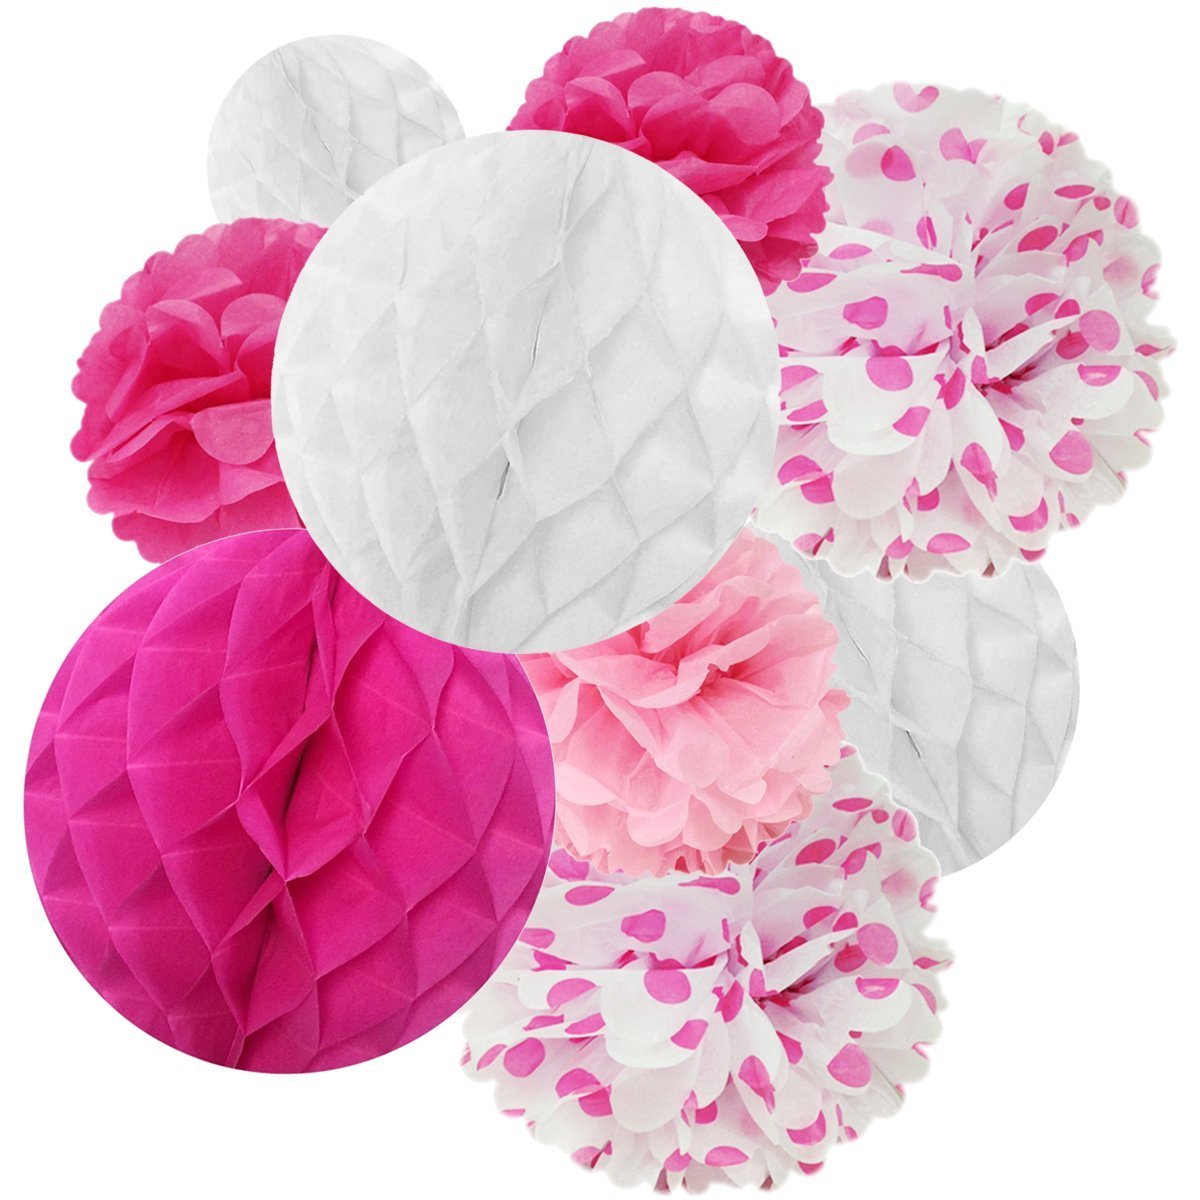 Tissue Paper Pom Poms, 9 in, Hot Pink, 3ct 